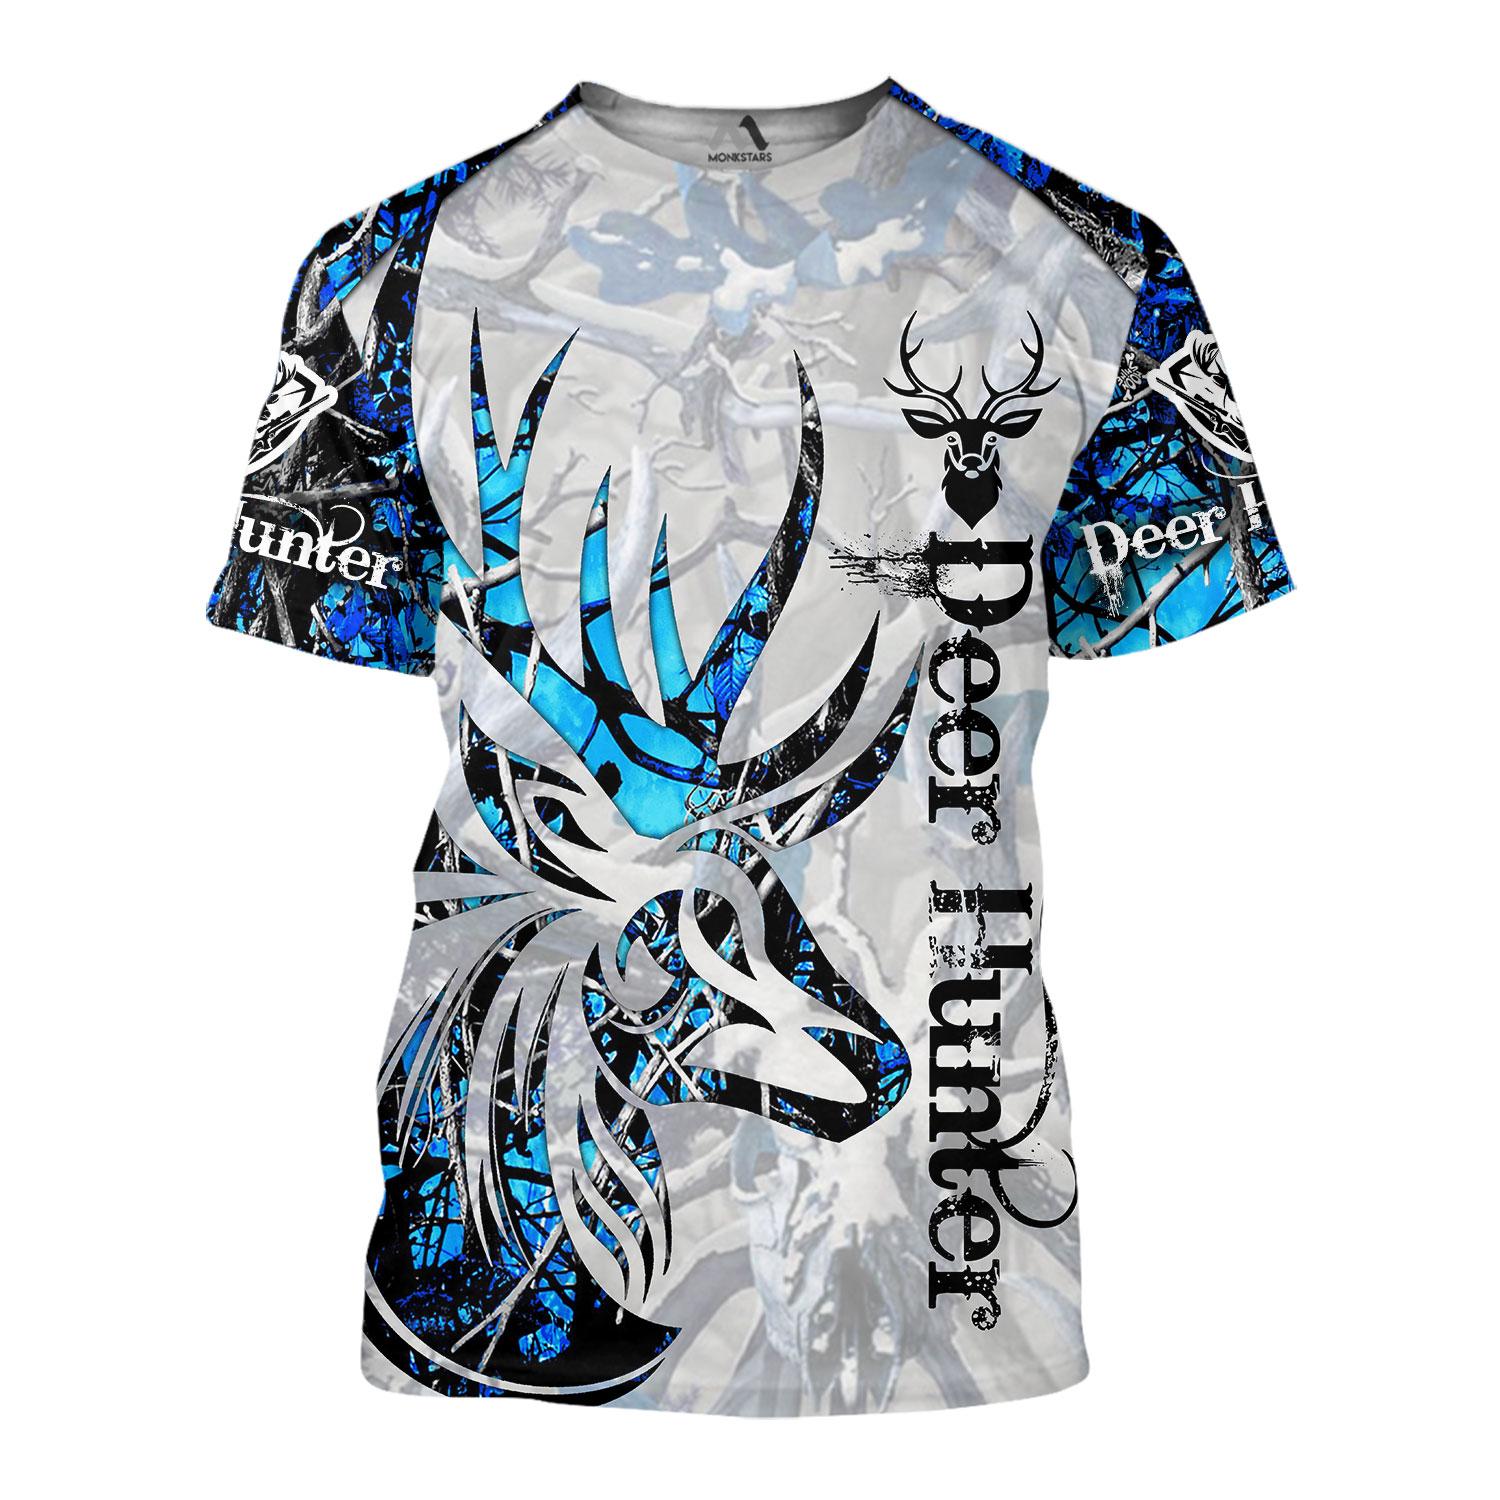 Deer tattoo blue camo 3d all over printed tshirt